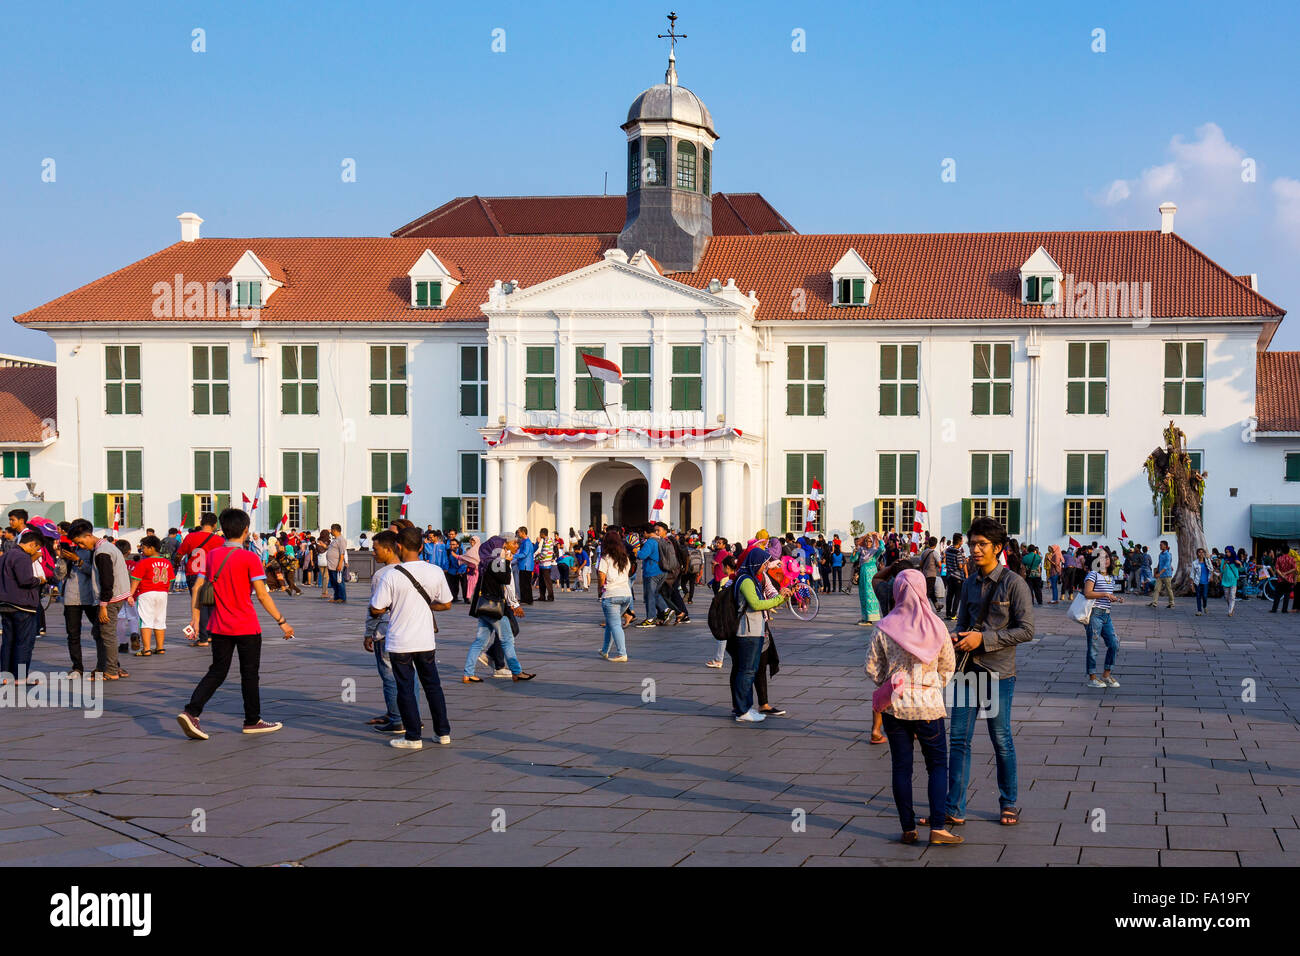 Stadhuis, former town hall of Batavia, Taman Fatahillah Square, Kota, historic centre of Jakarta, West Java, Java, Indonesia Stock Photo